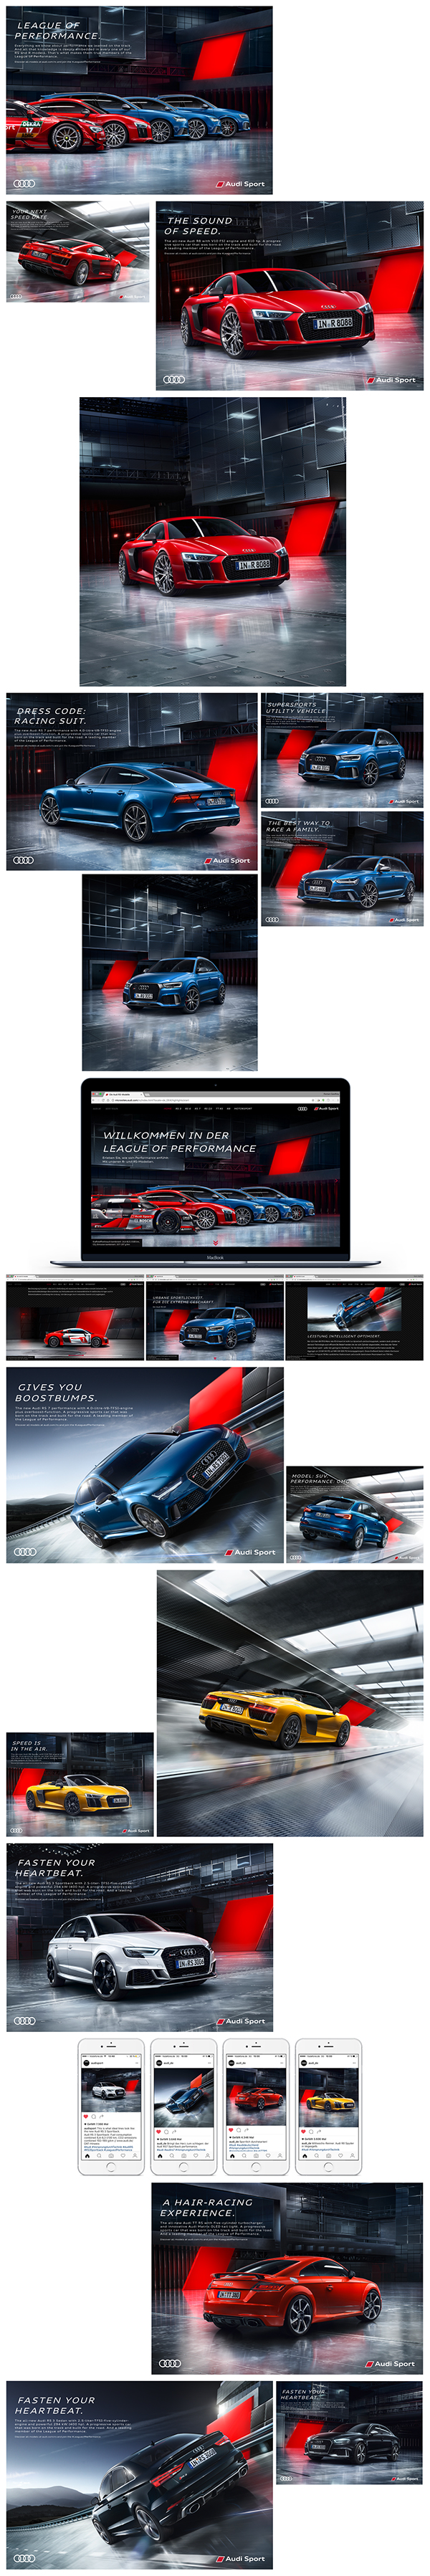 Audi Sport Brand Campaign 2016 – New Stuff